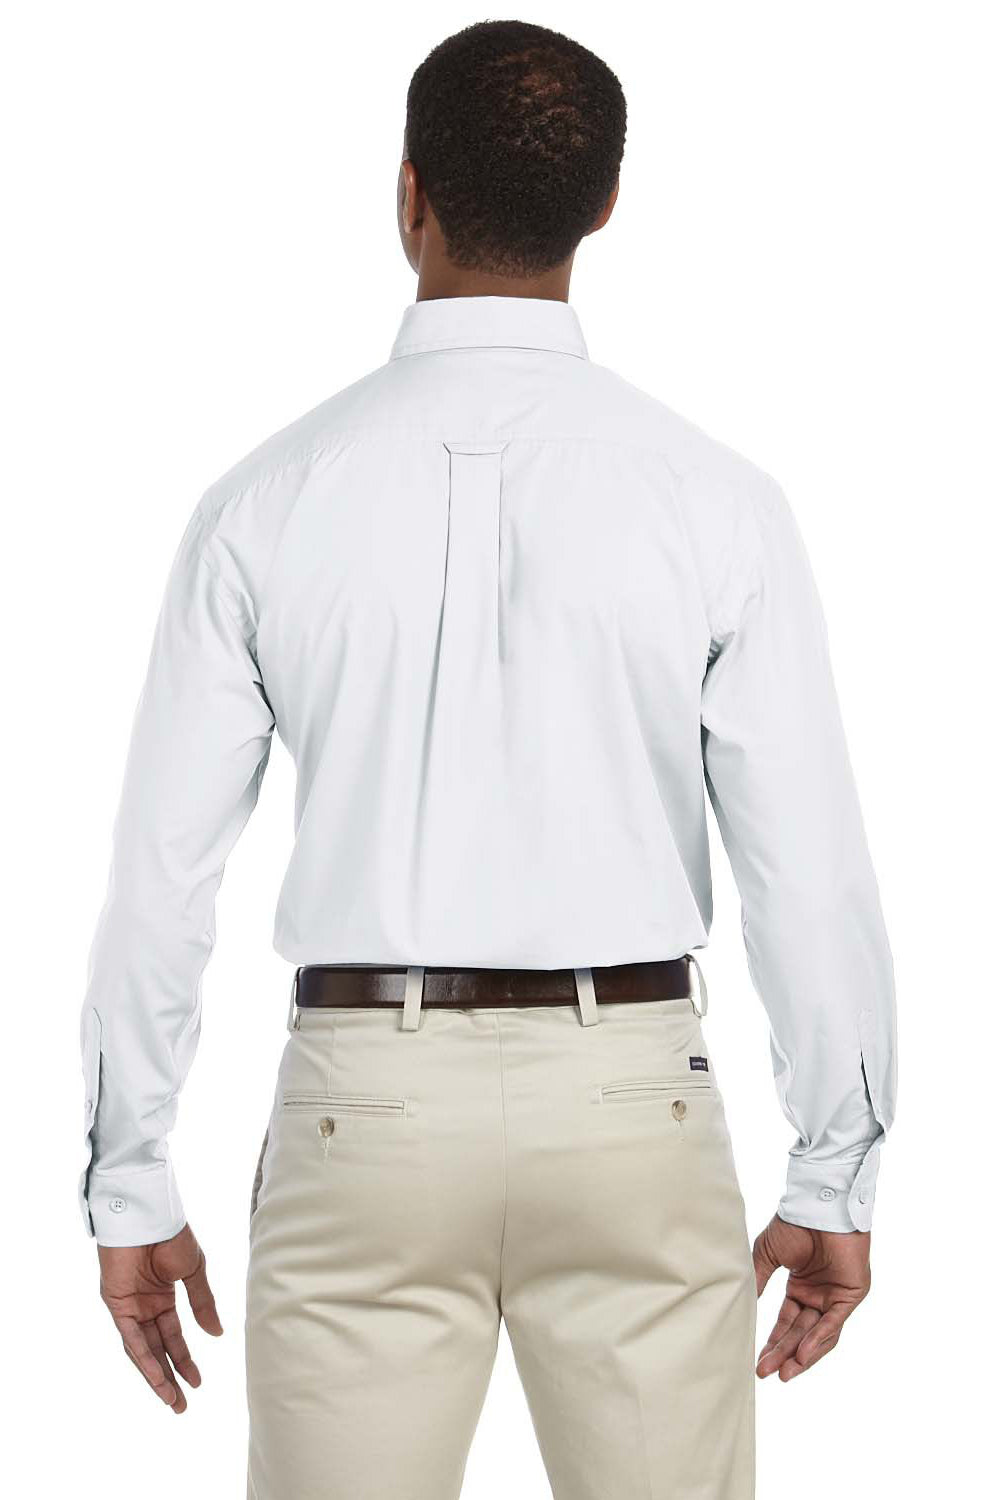 Harriton M510 Mens Essential Long Sleeve Button Down Shirt w/ Pocket White Back